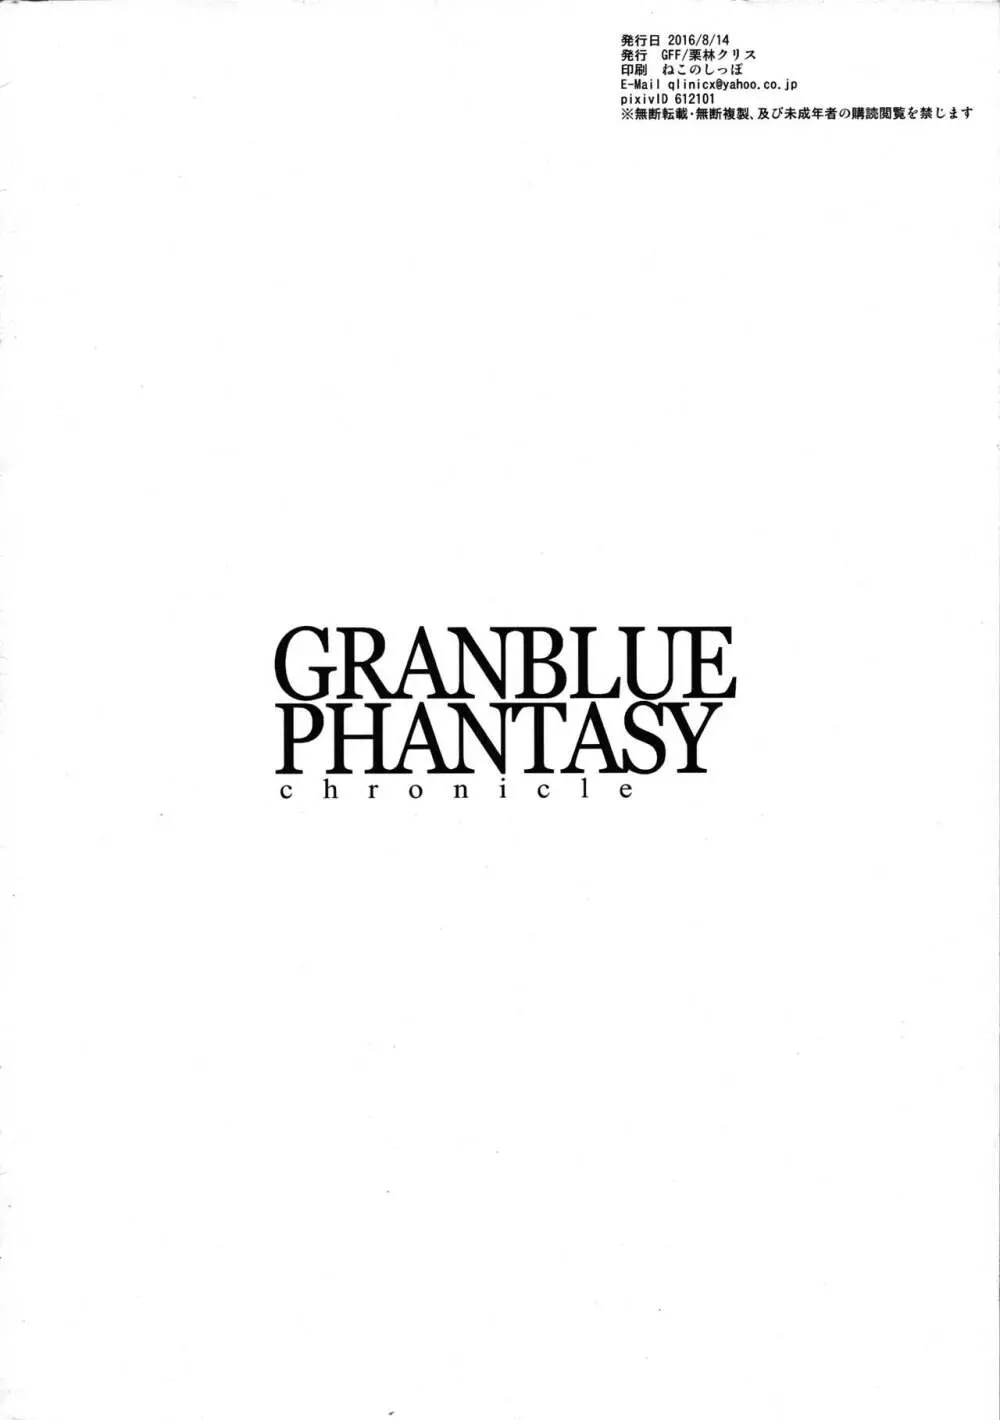 GRANBLUE PHANTASY chronicle vol.01 - page8